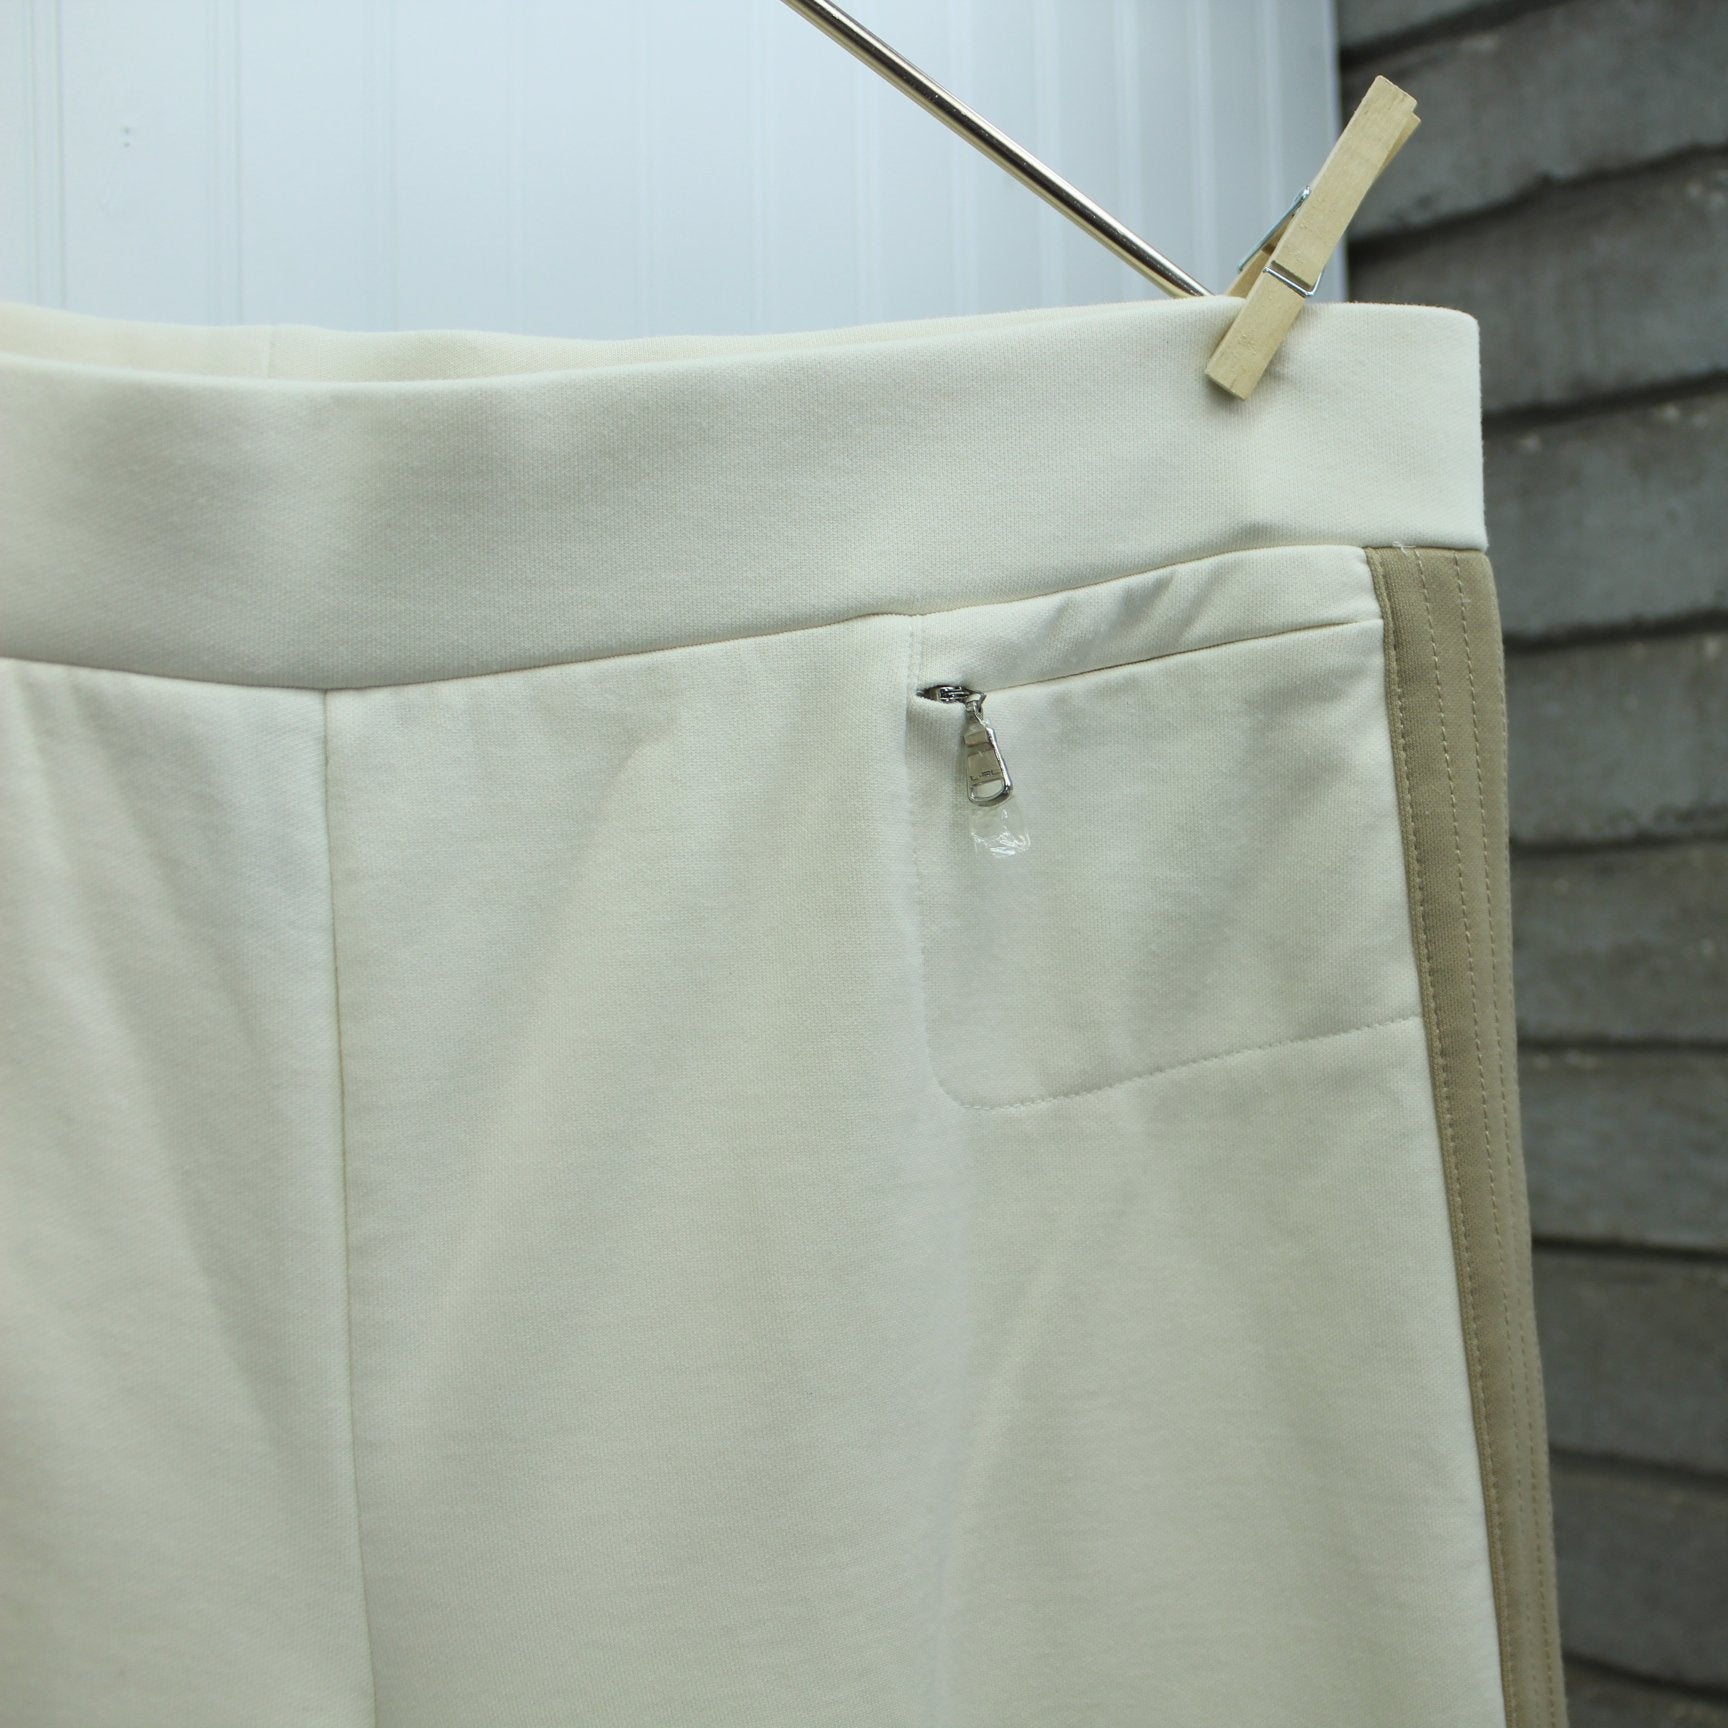 RL Ralph Lauren Active Pants Suit Casual Jogger Cream Tan Nice Detail pants zip pocket side detail trim